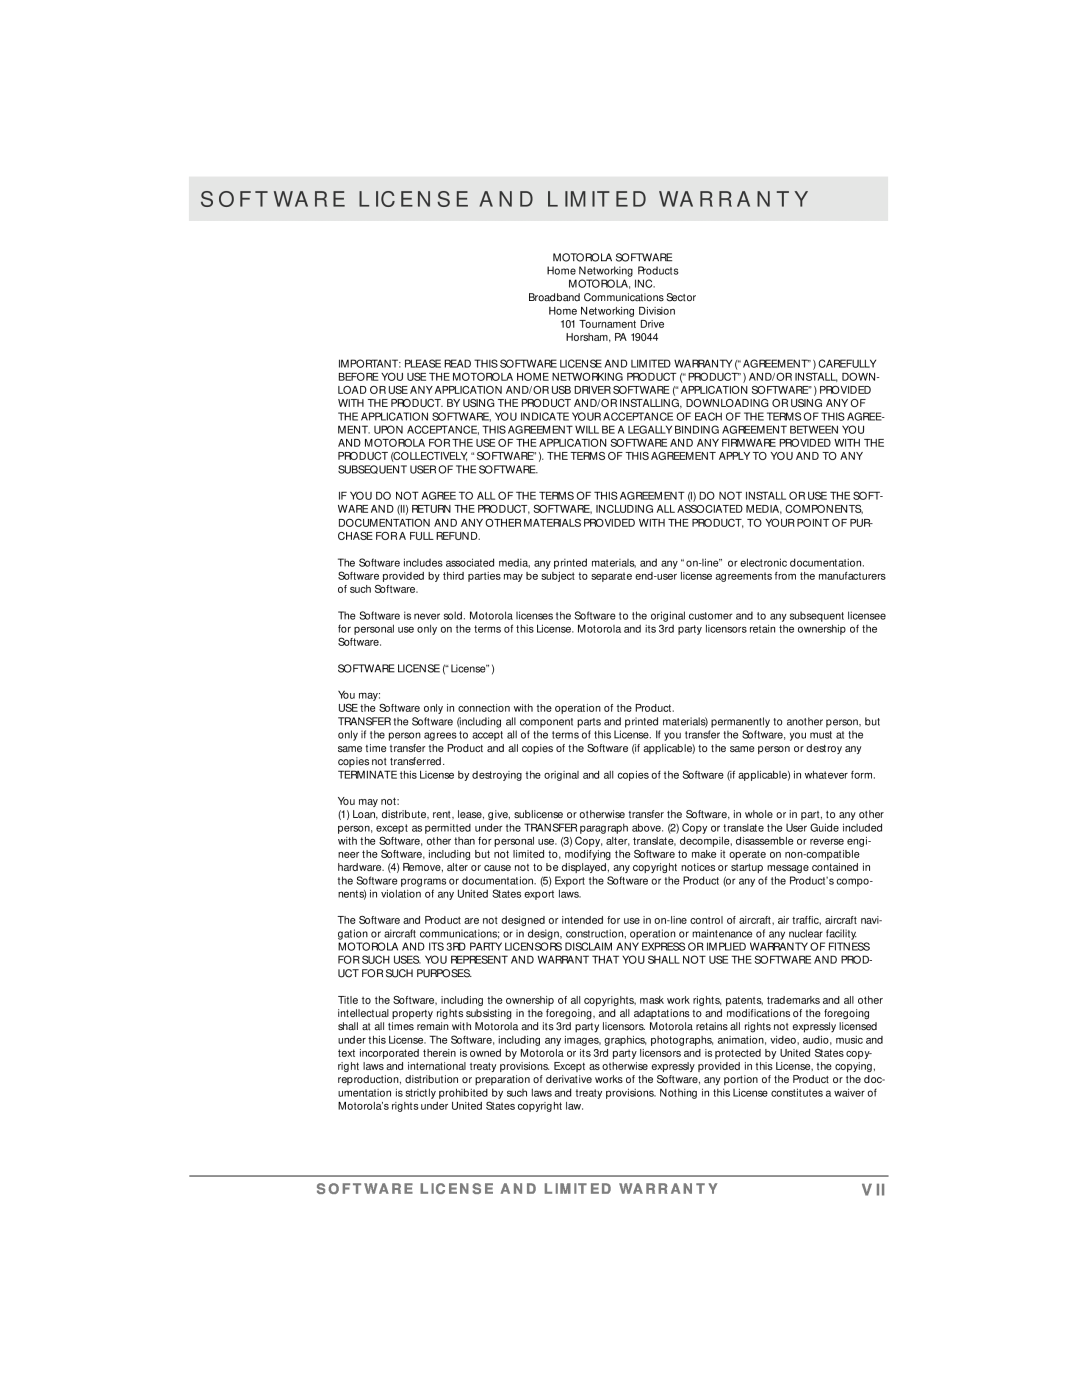 Motorola simplefi manual Software License And Limited Warranty 